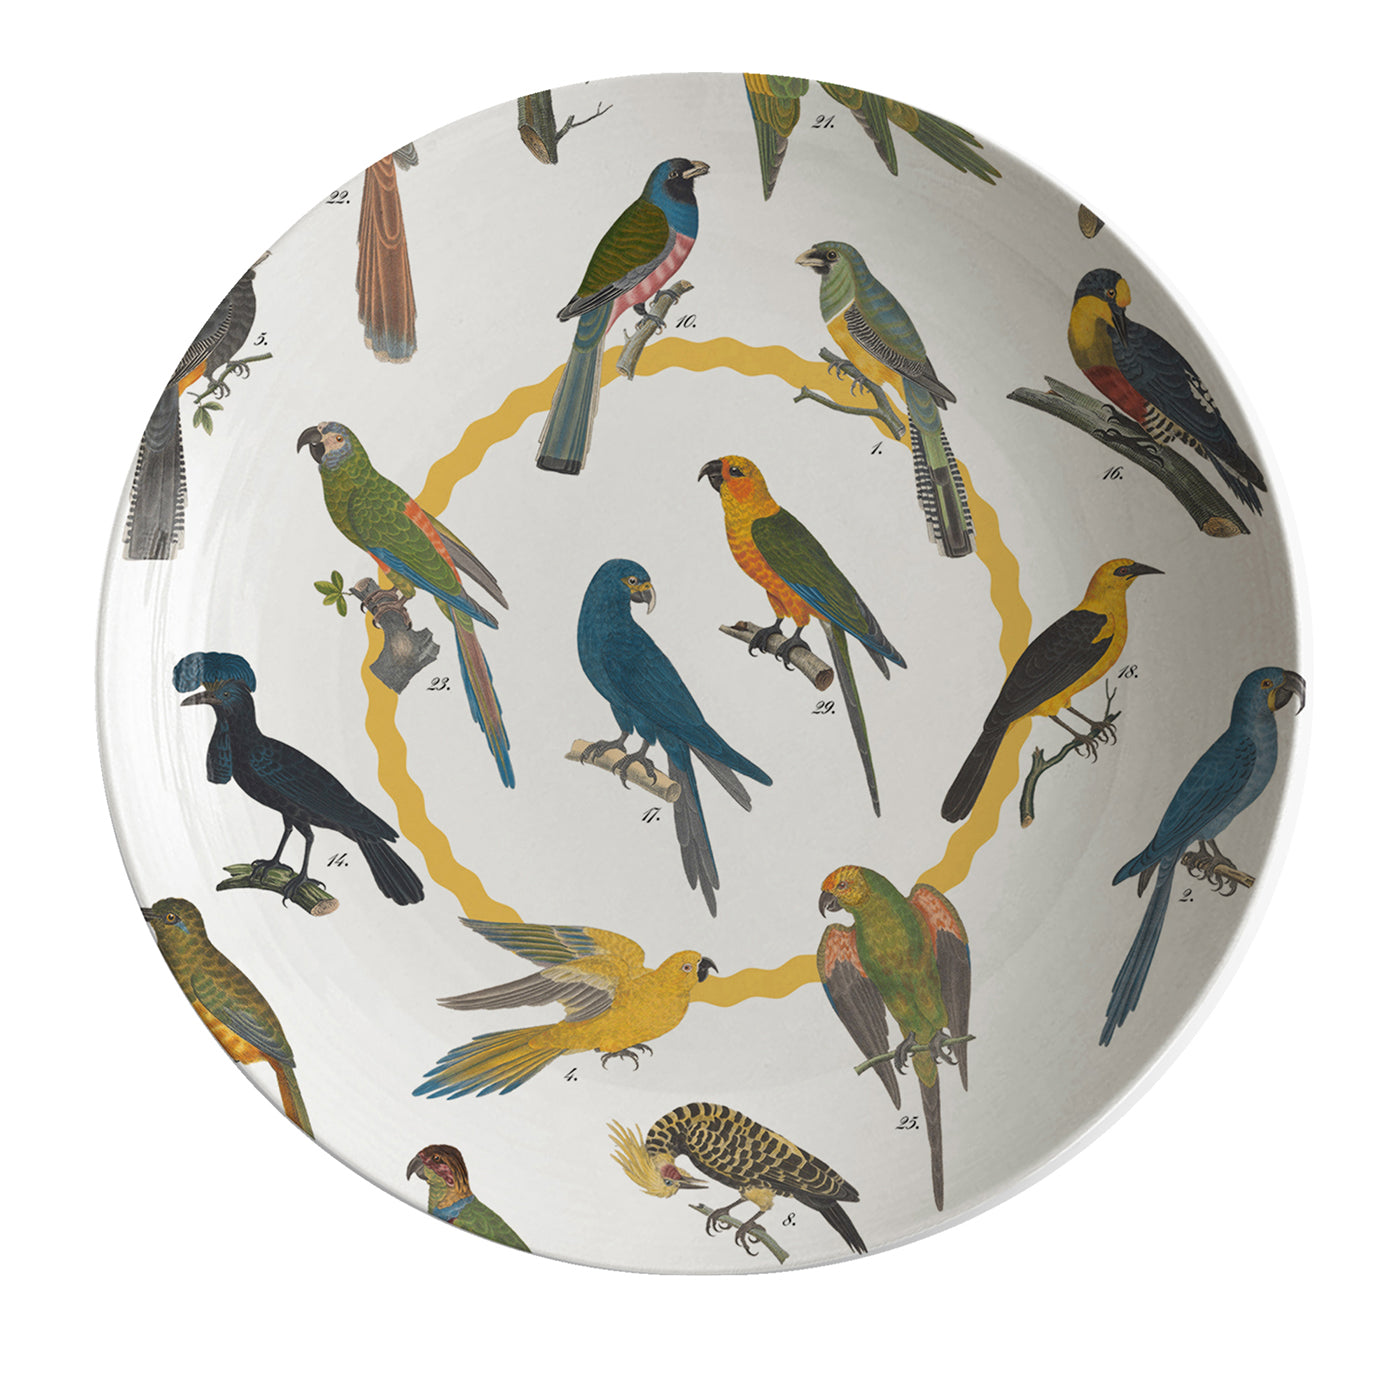 Cabinet De Curiosités Porzellan Suppenteller mit Vögeln - Hauptansicht